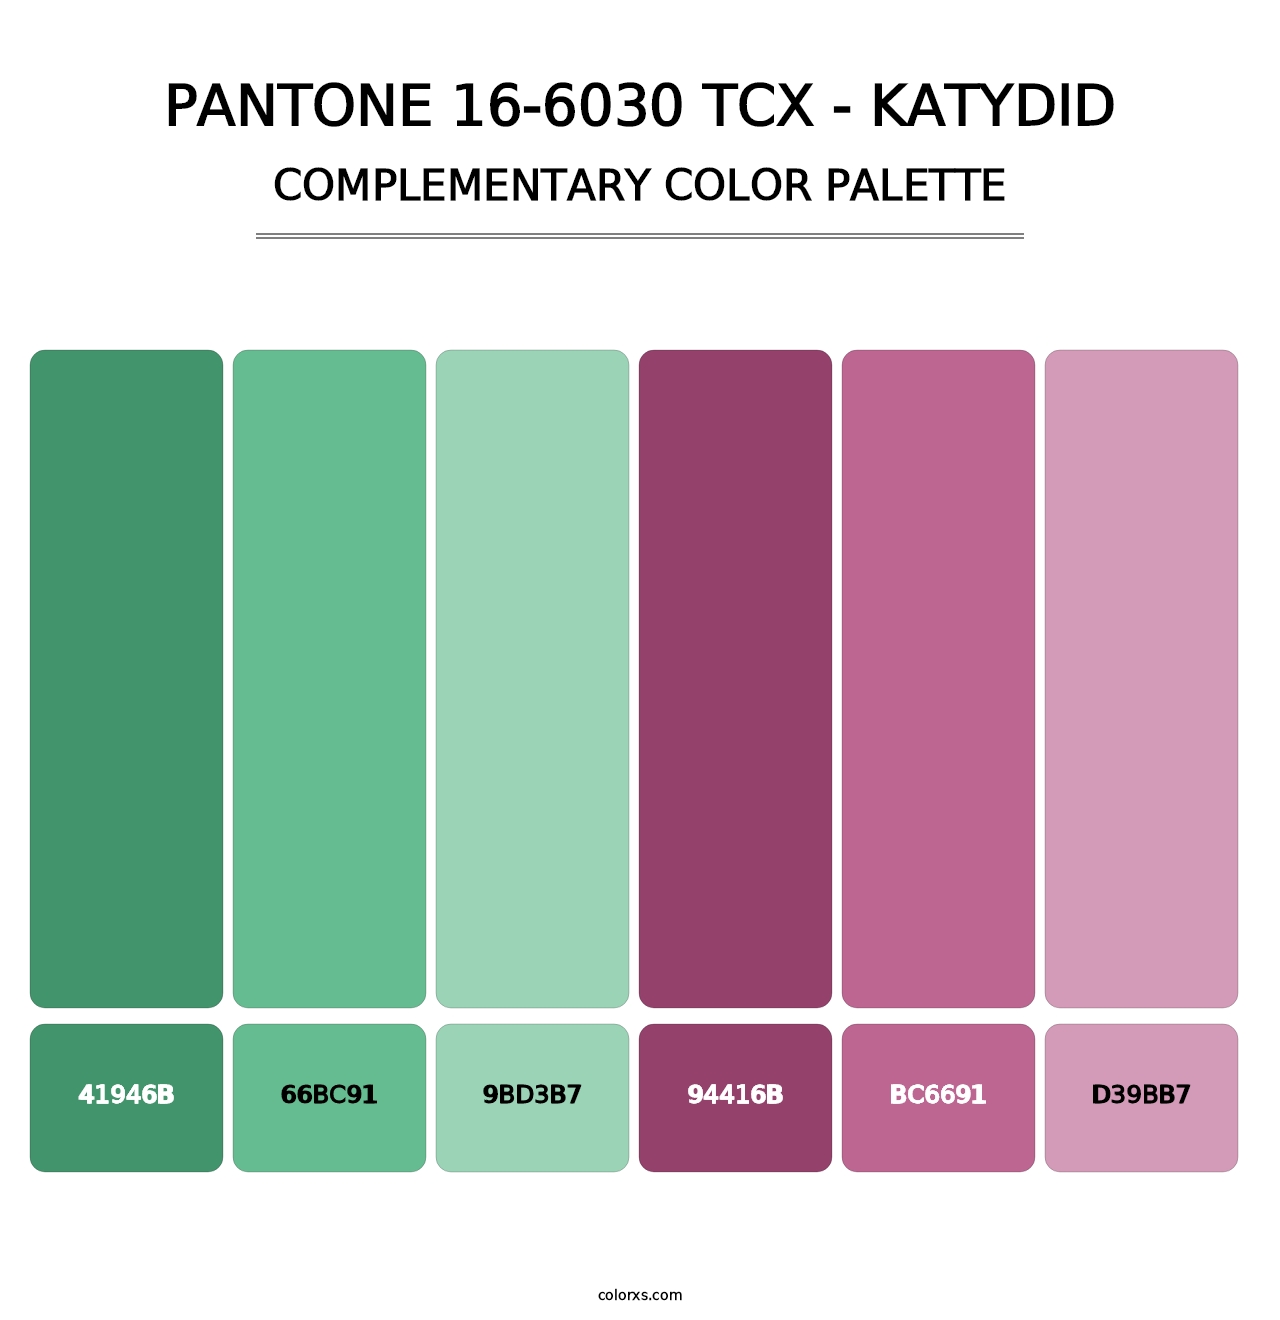 PANTONE 16-6030 TCX - Katydid - Complementary Color Palette